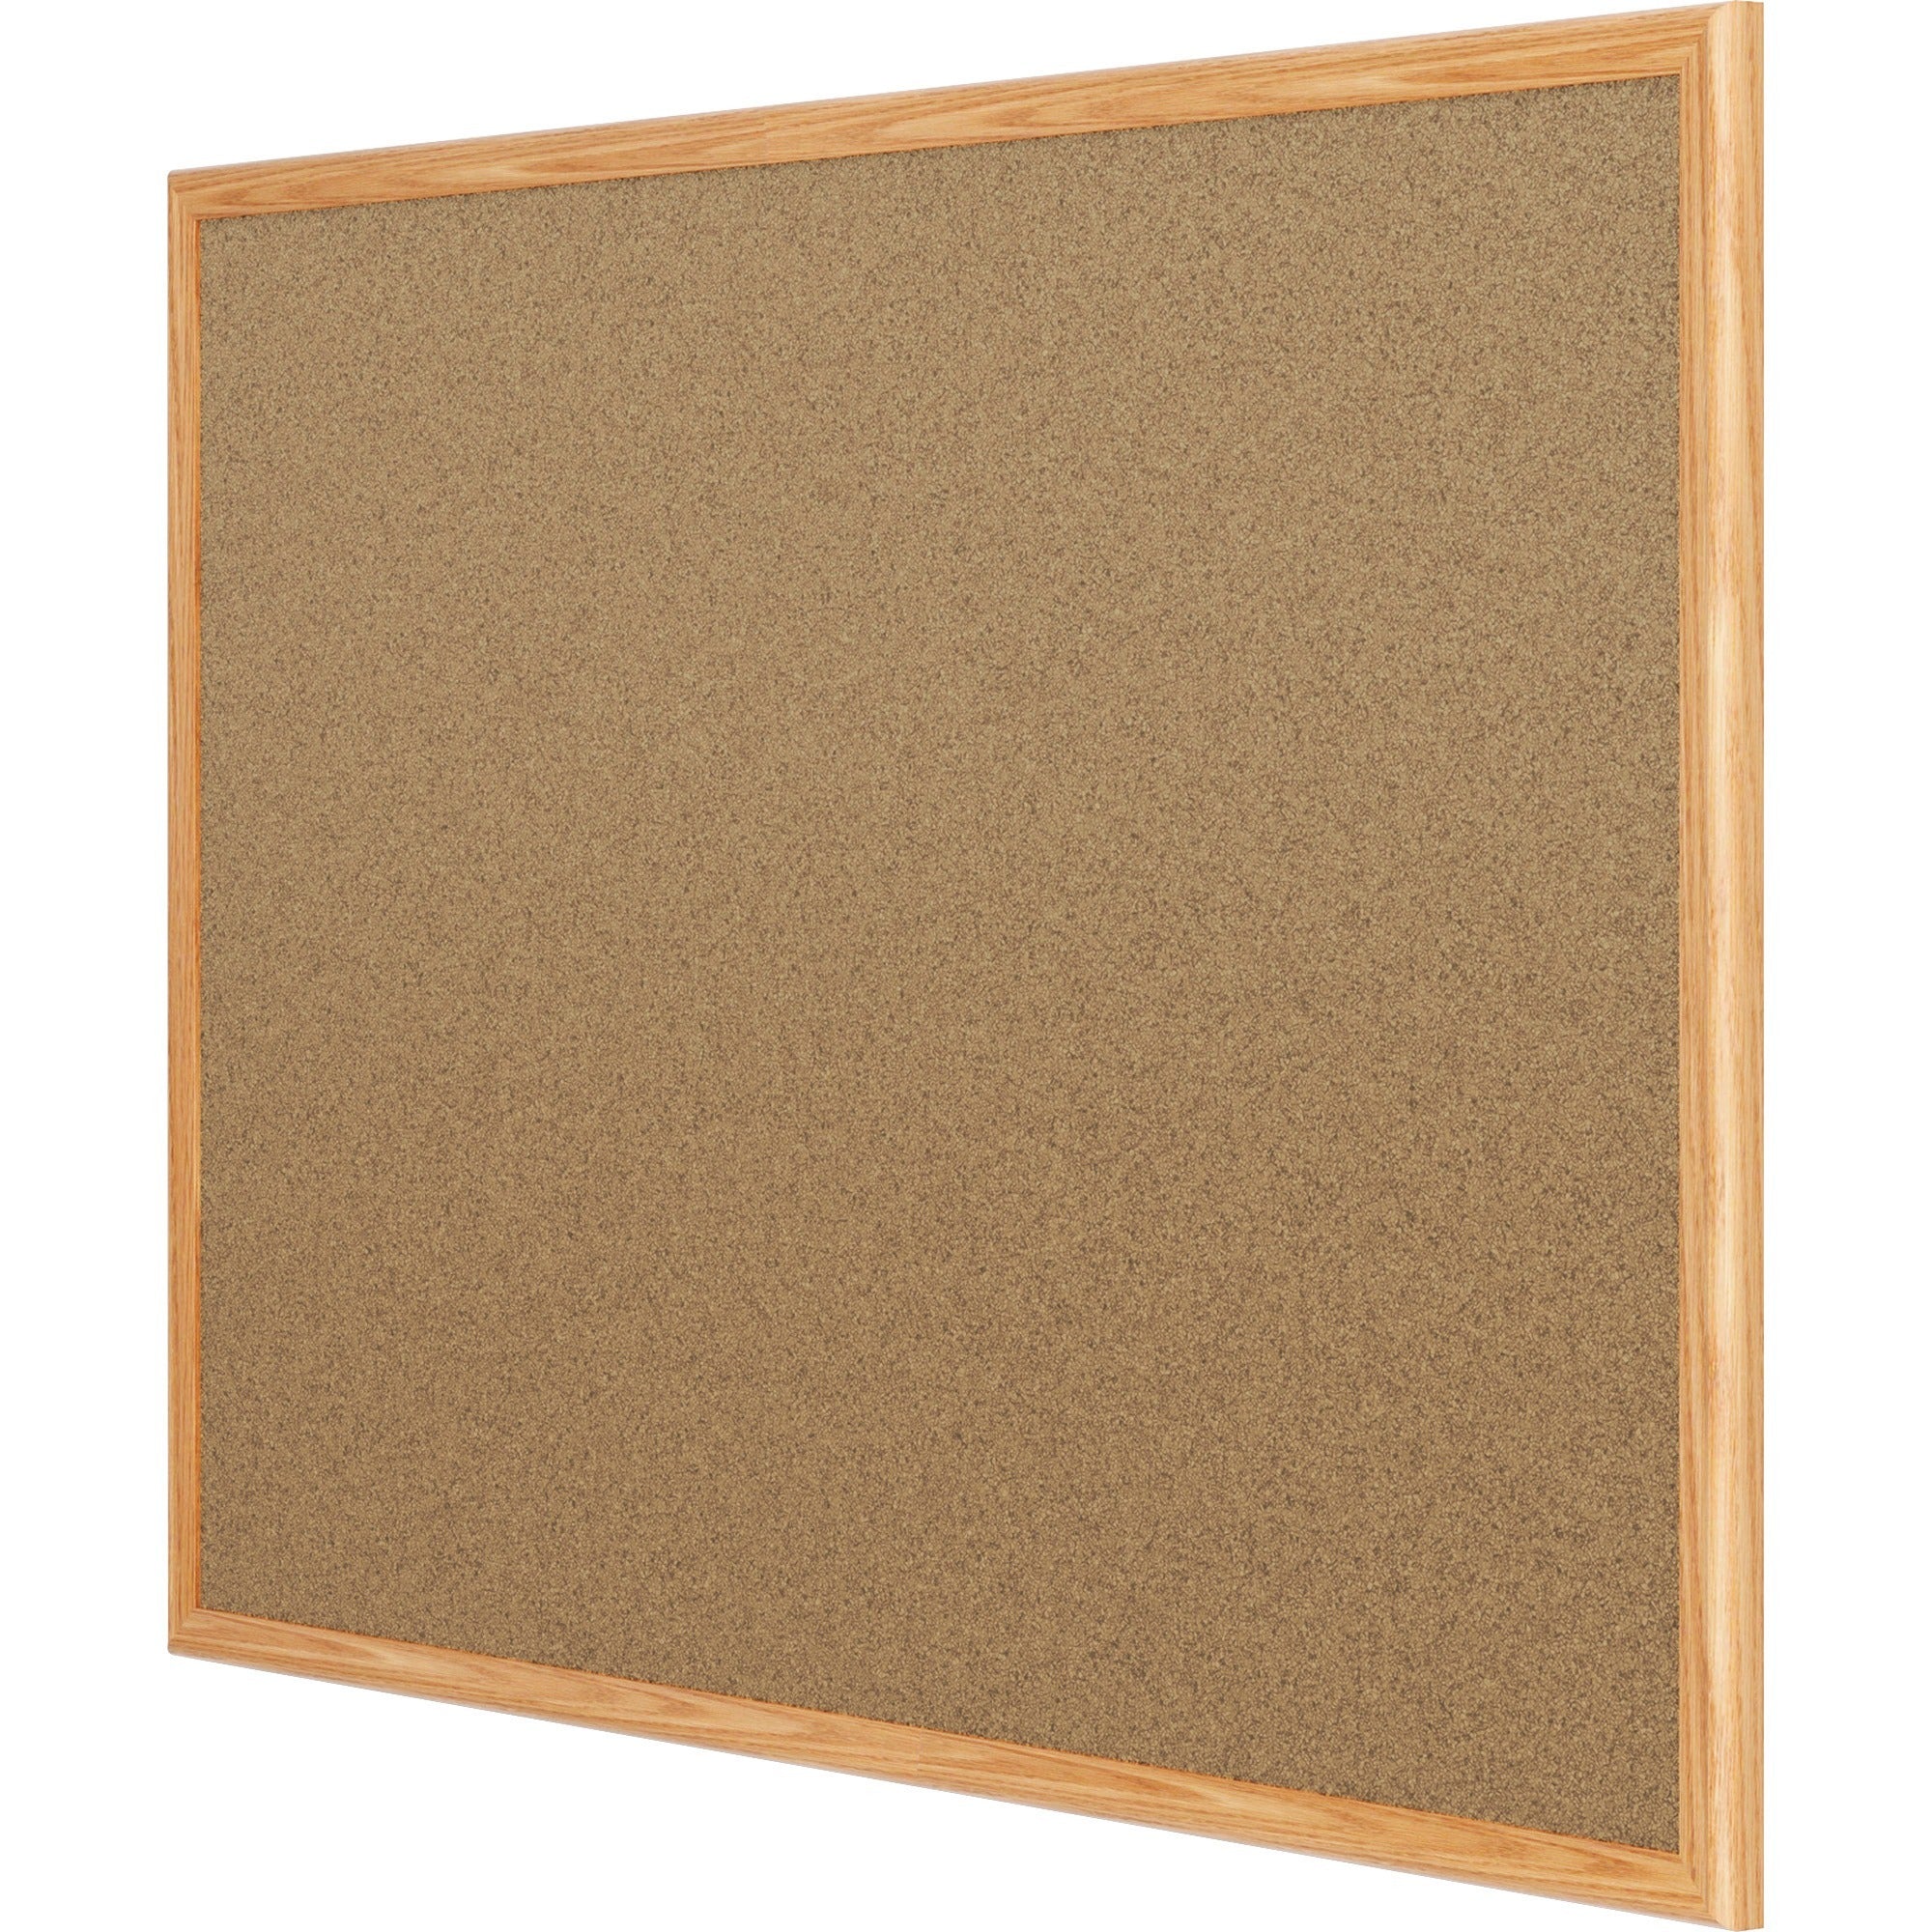 Mead Classic Cork Bulletin Board - 36" Height x 24" Width - Natural Cork Surface - Self-healing - Oak Aluminum Frame - 1 Each - 